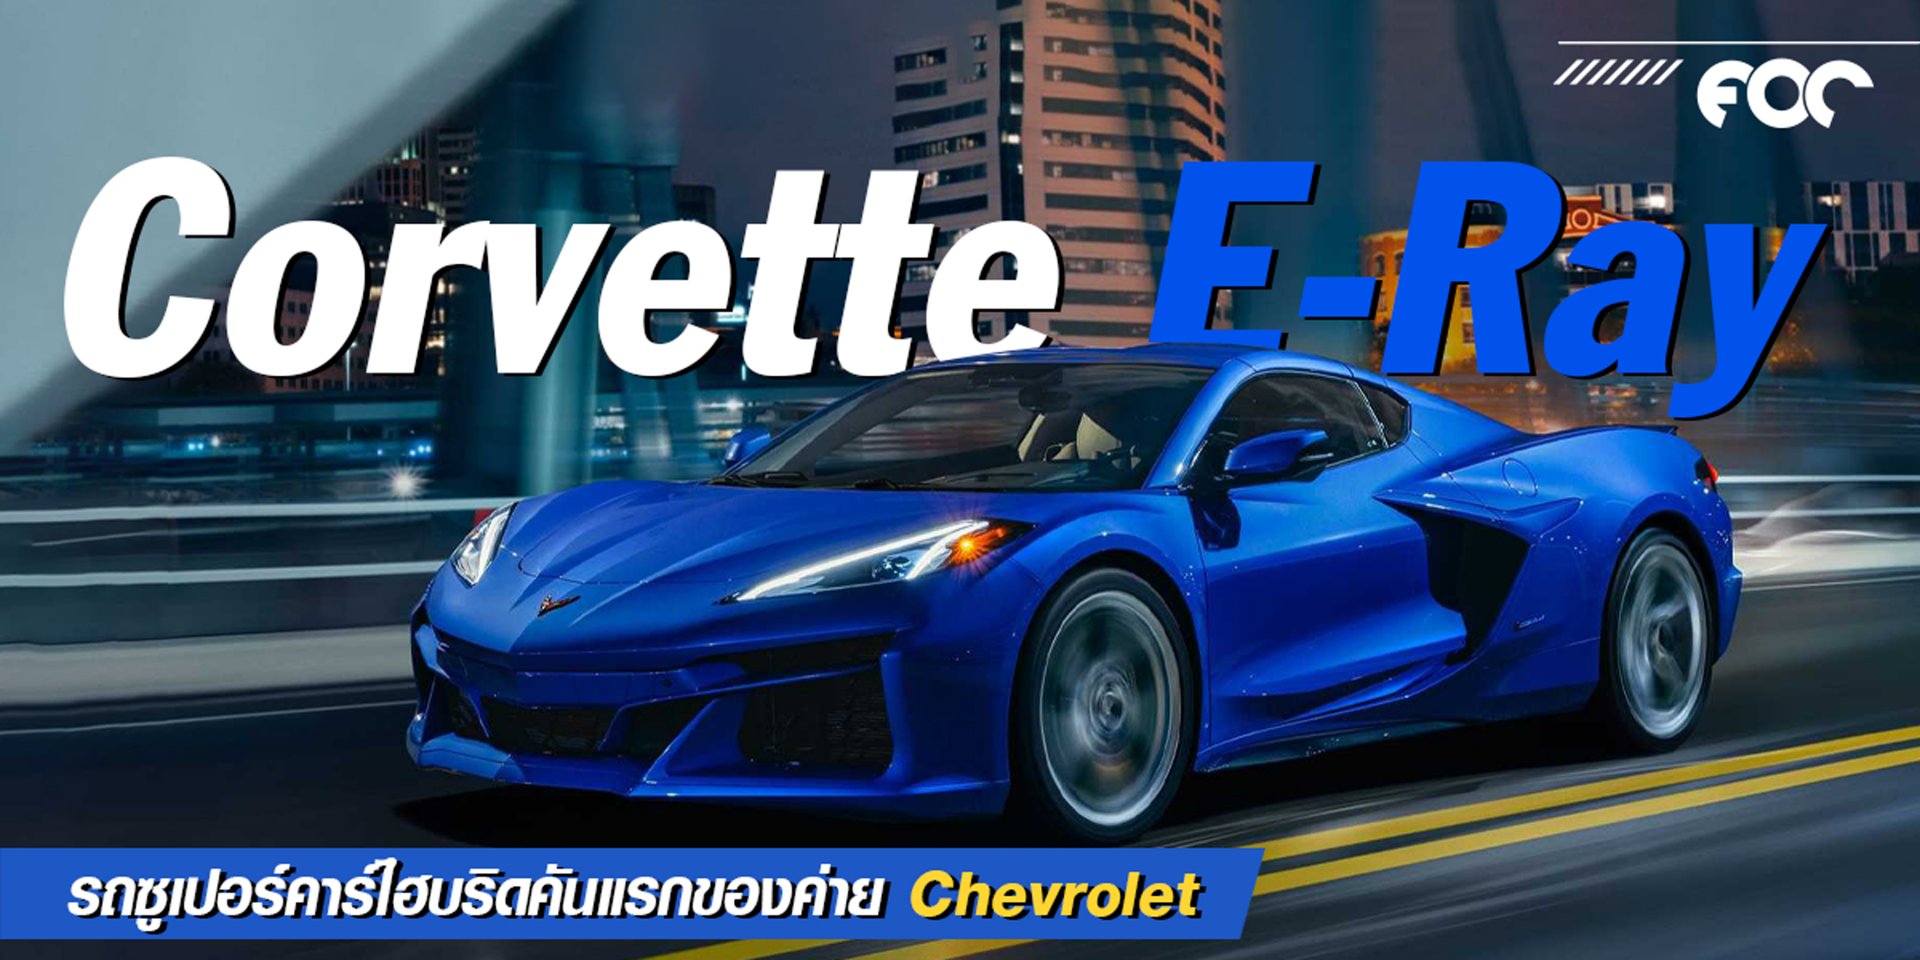 Chevrolet เปิดตัว Corvette E-Ray รถซุเปอร์คาร์ไฮบริดคันแรกของค่าย